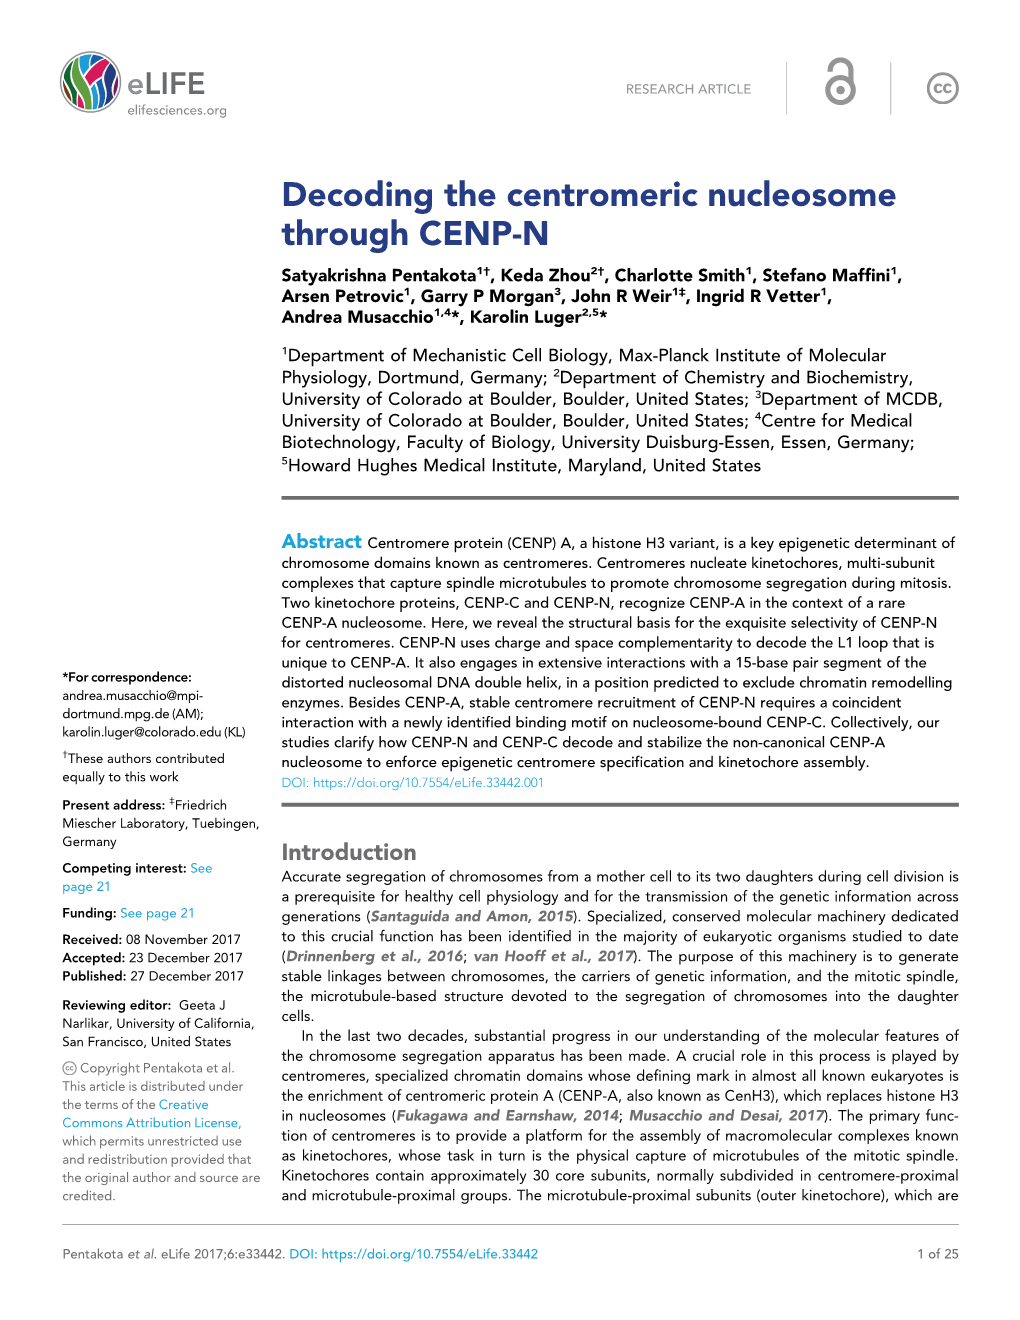 Decoding the Centromeric Nucleosome Through CENP-N